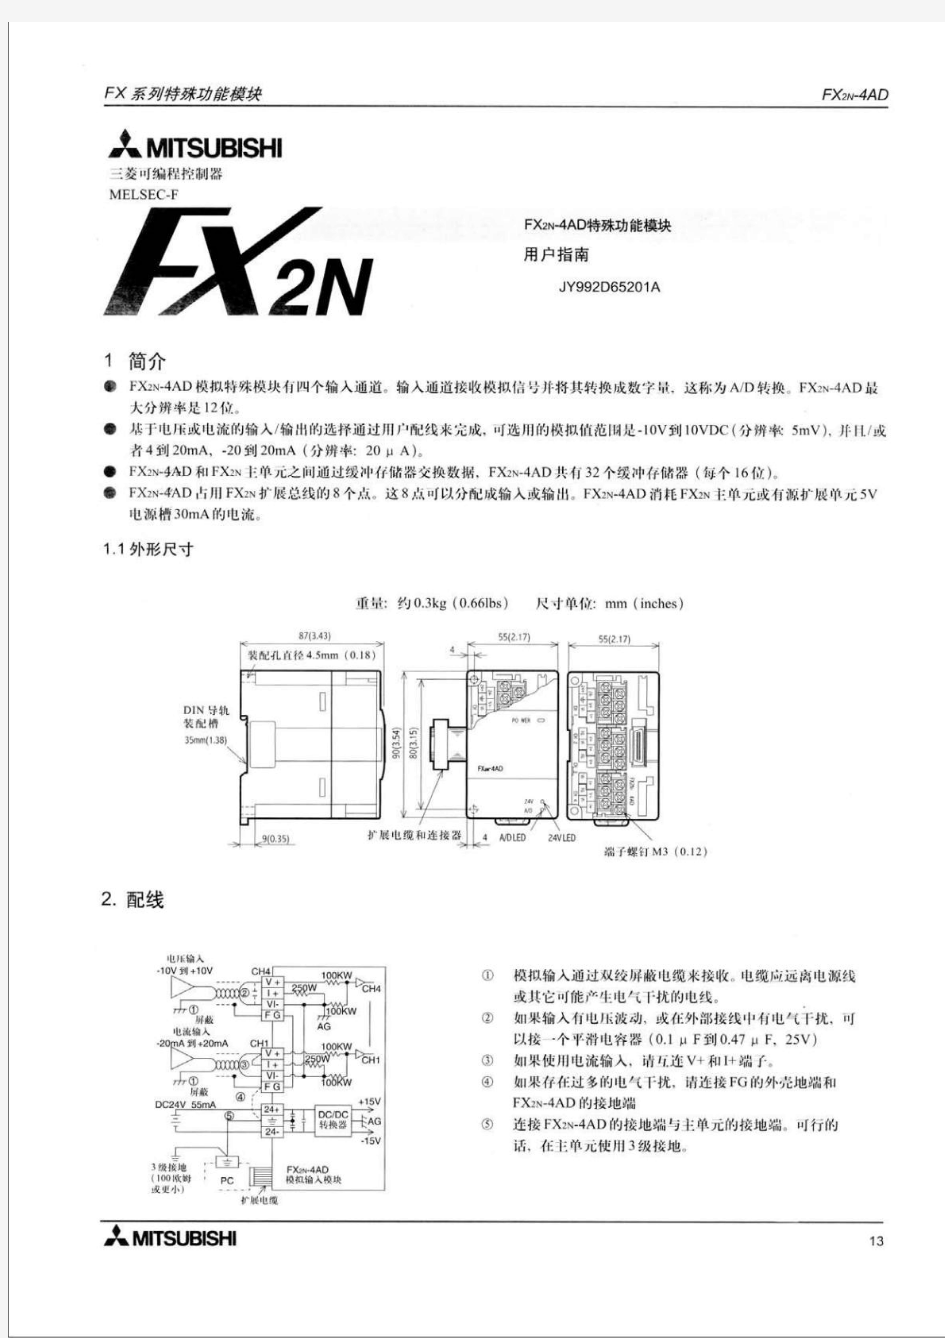 downloadfile_三菱 -fx2n4ad中文手册